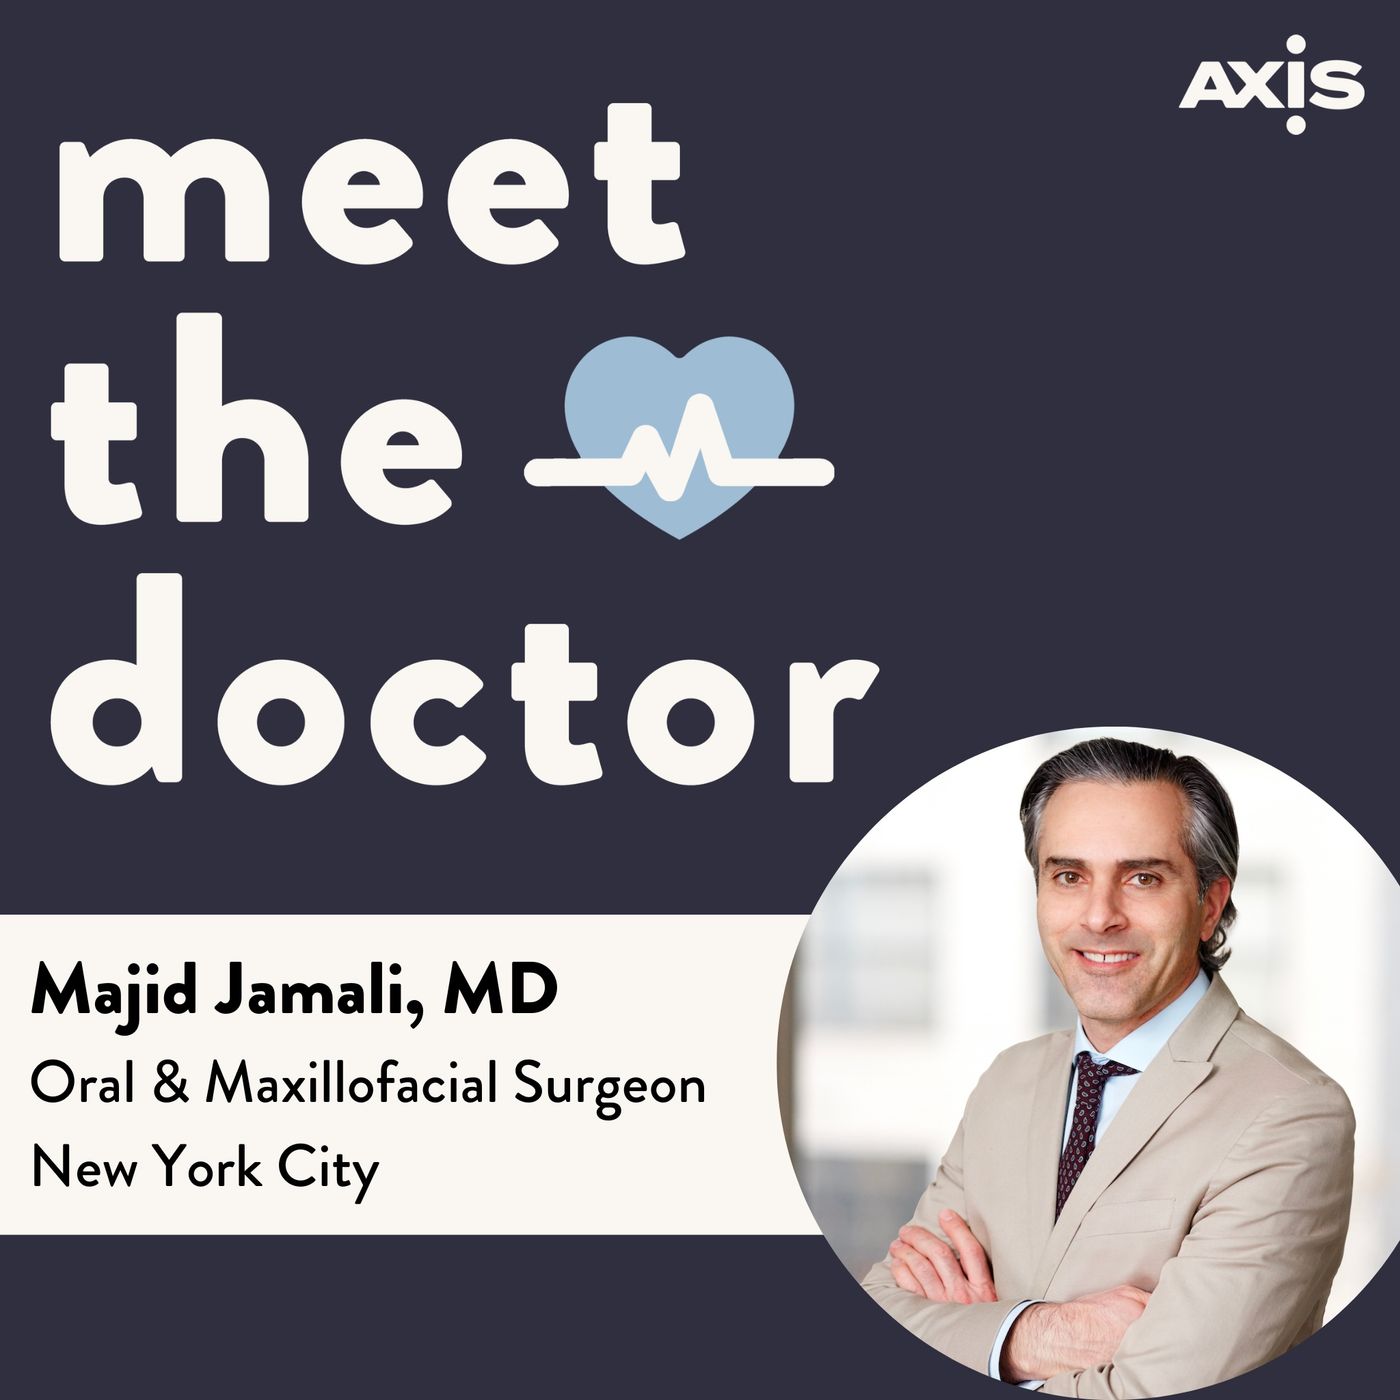 Majid Jamali, MD - Oral & Maxillofacial Surgeon in New York City